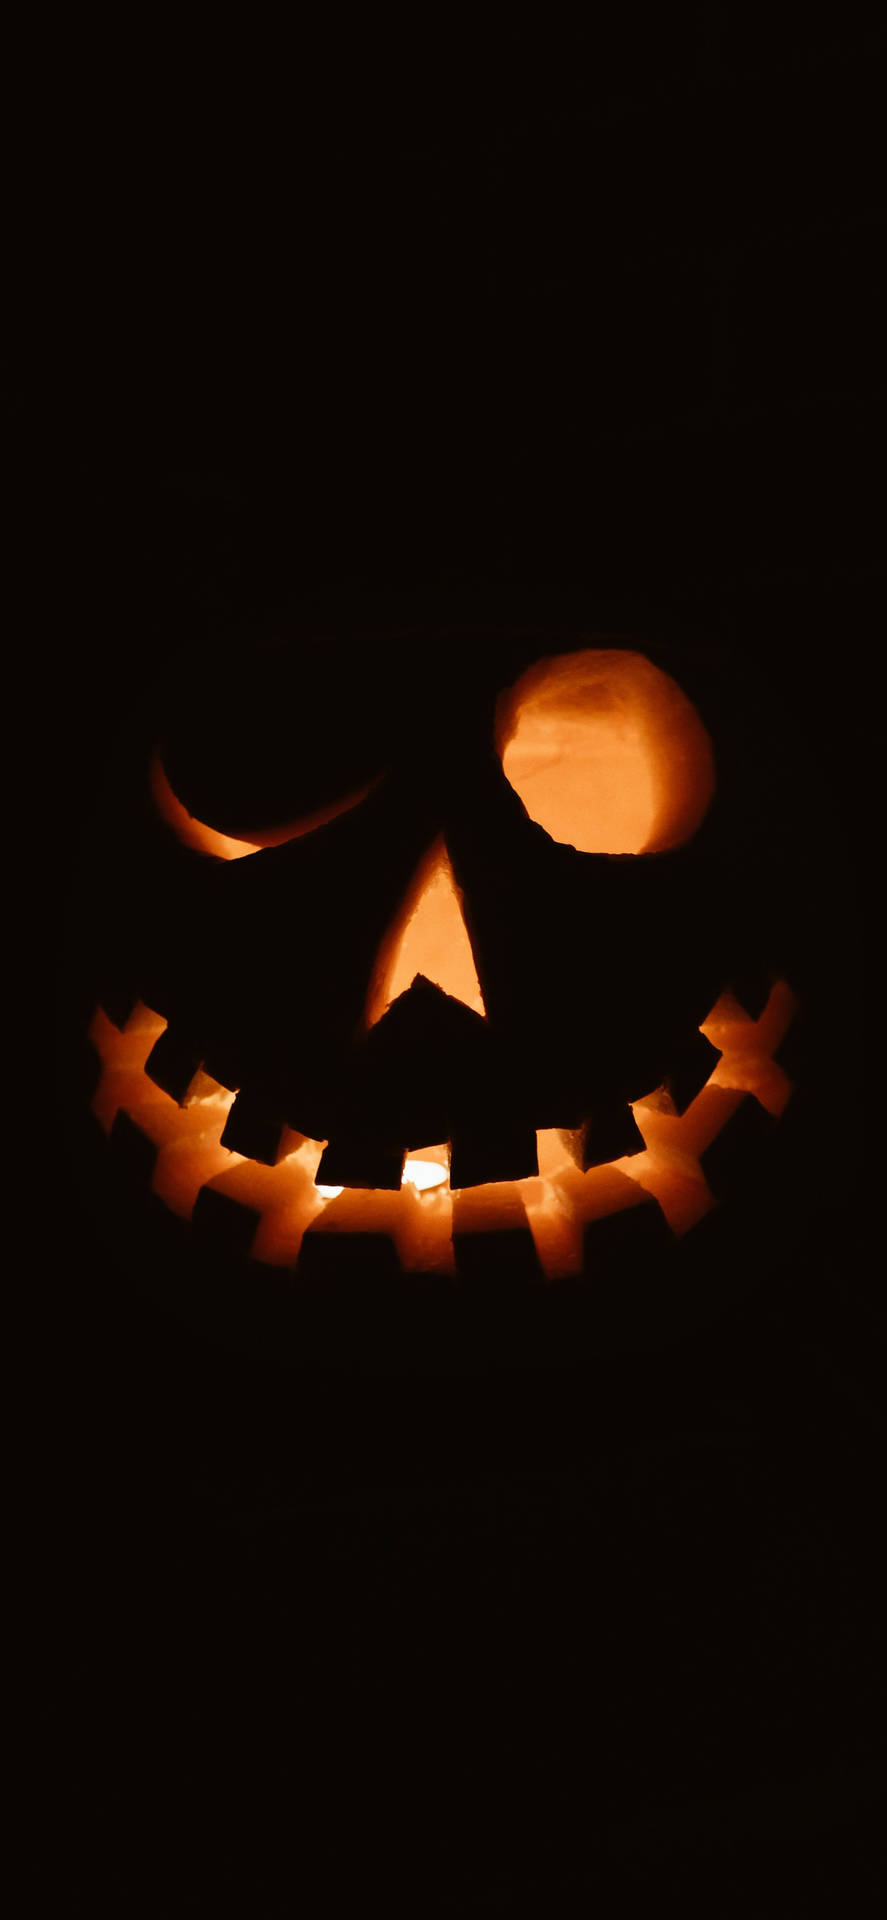 Jack-o-lantern Face Halloween Iphone Background